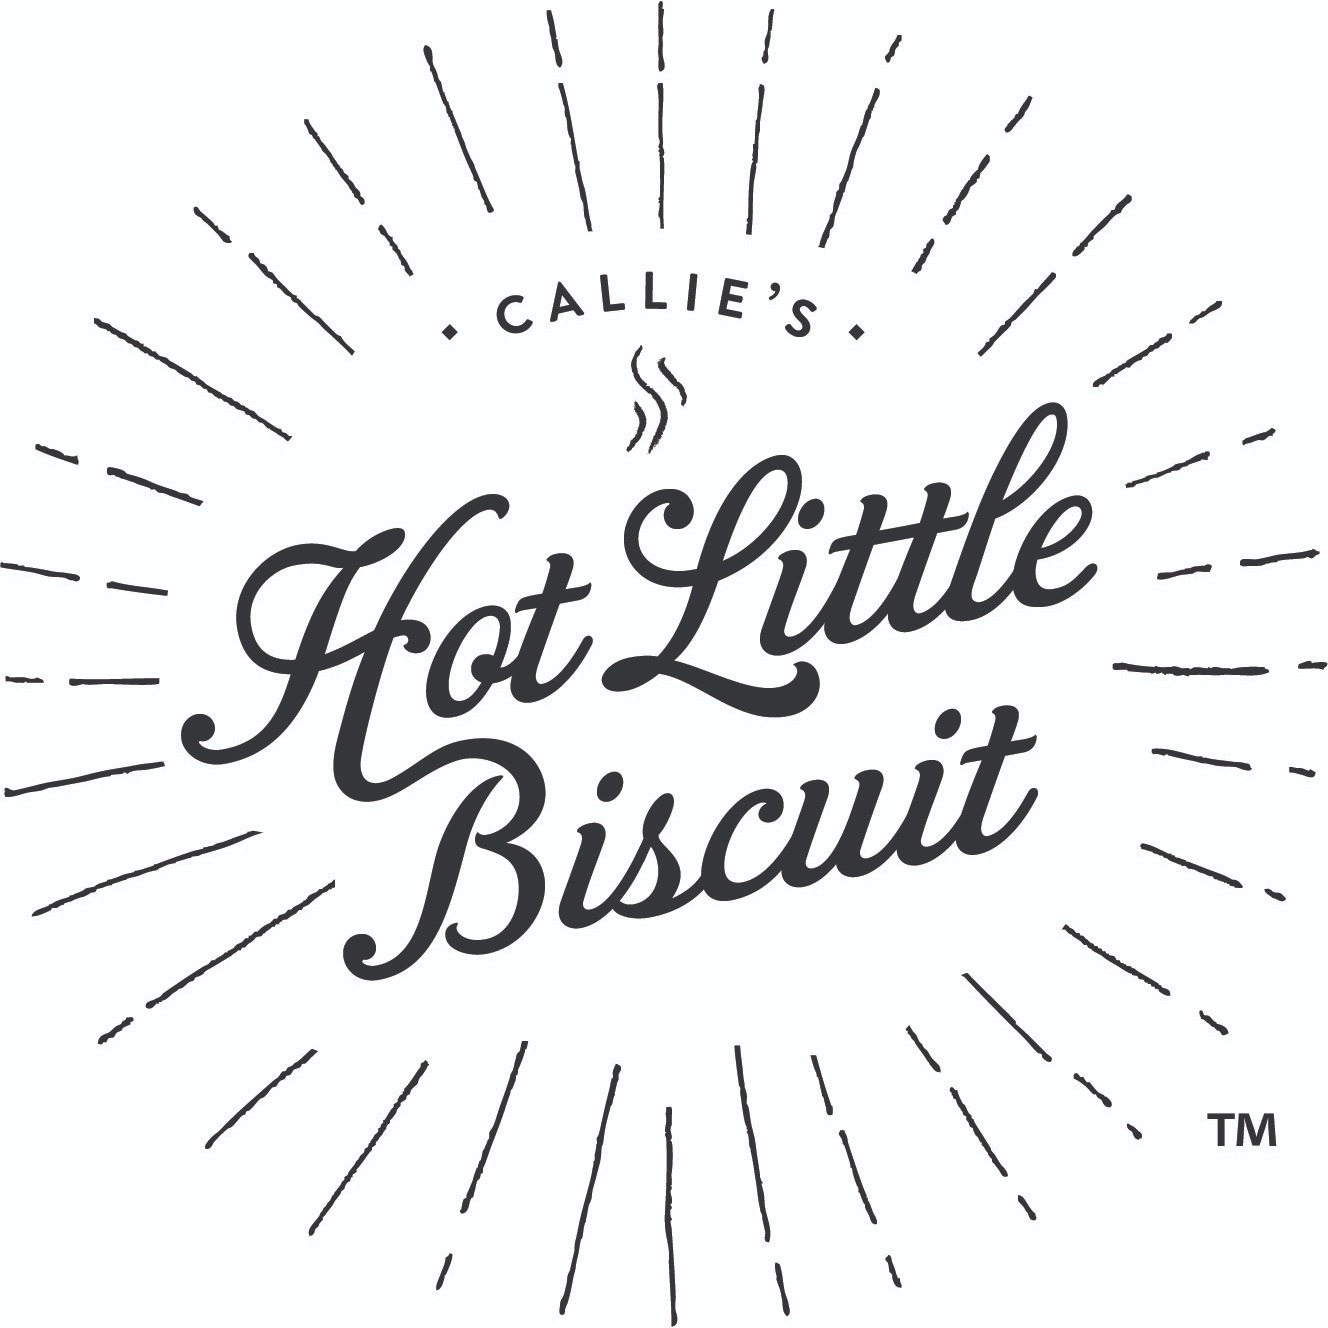 Callie's Hot Little Biscuit - Charleston, SC 29403 - (843)737-5159 | ShowMeLocal.com